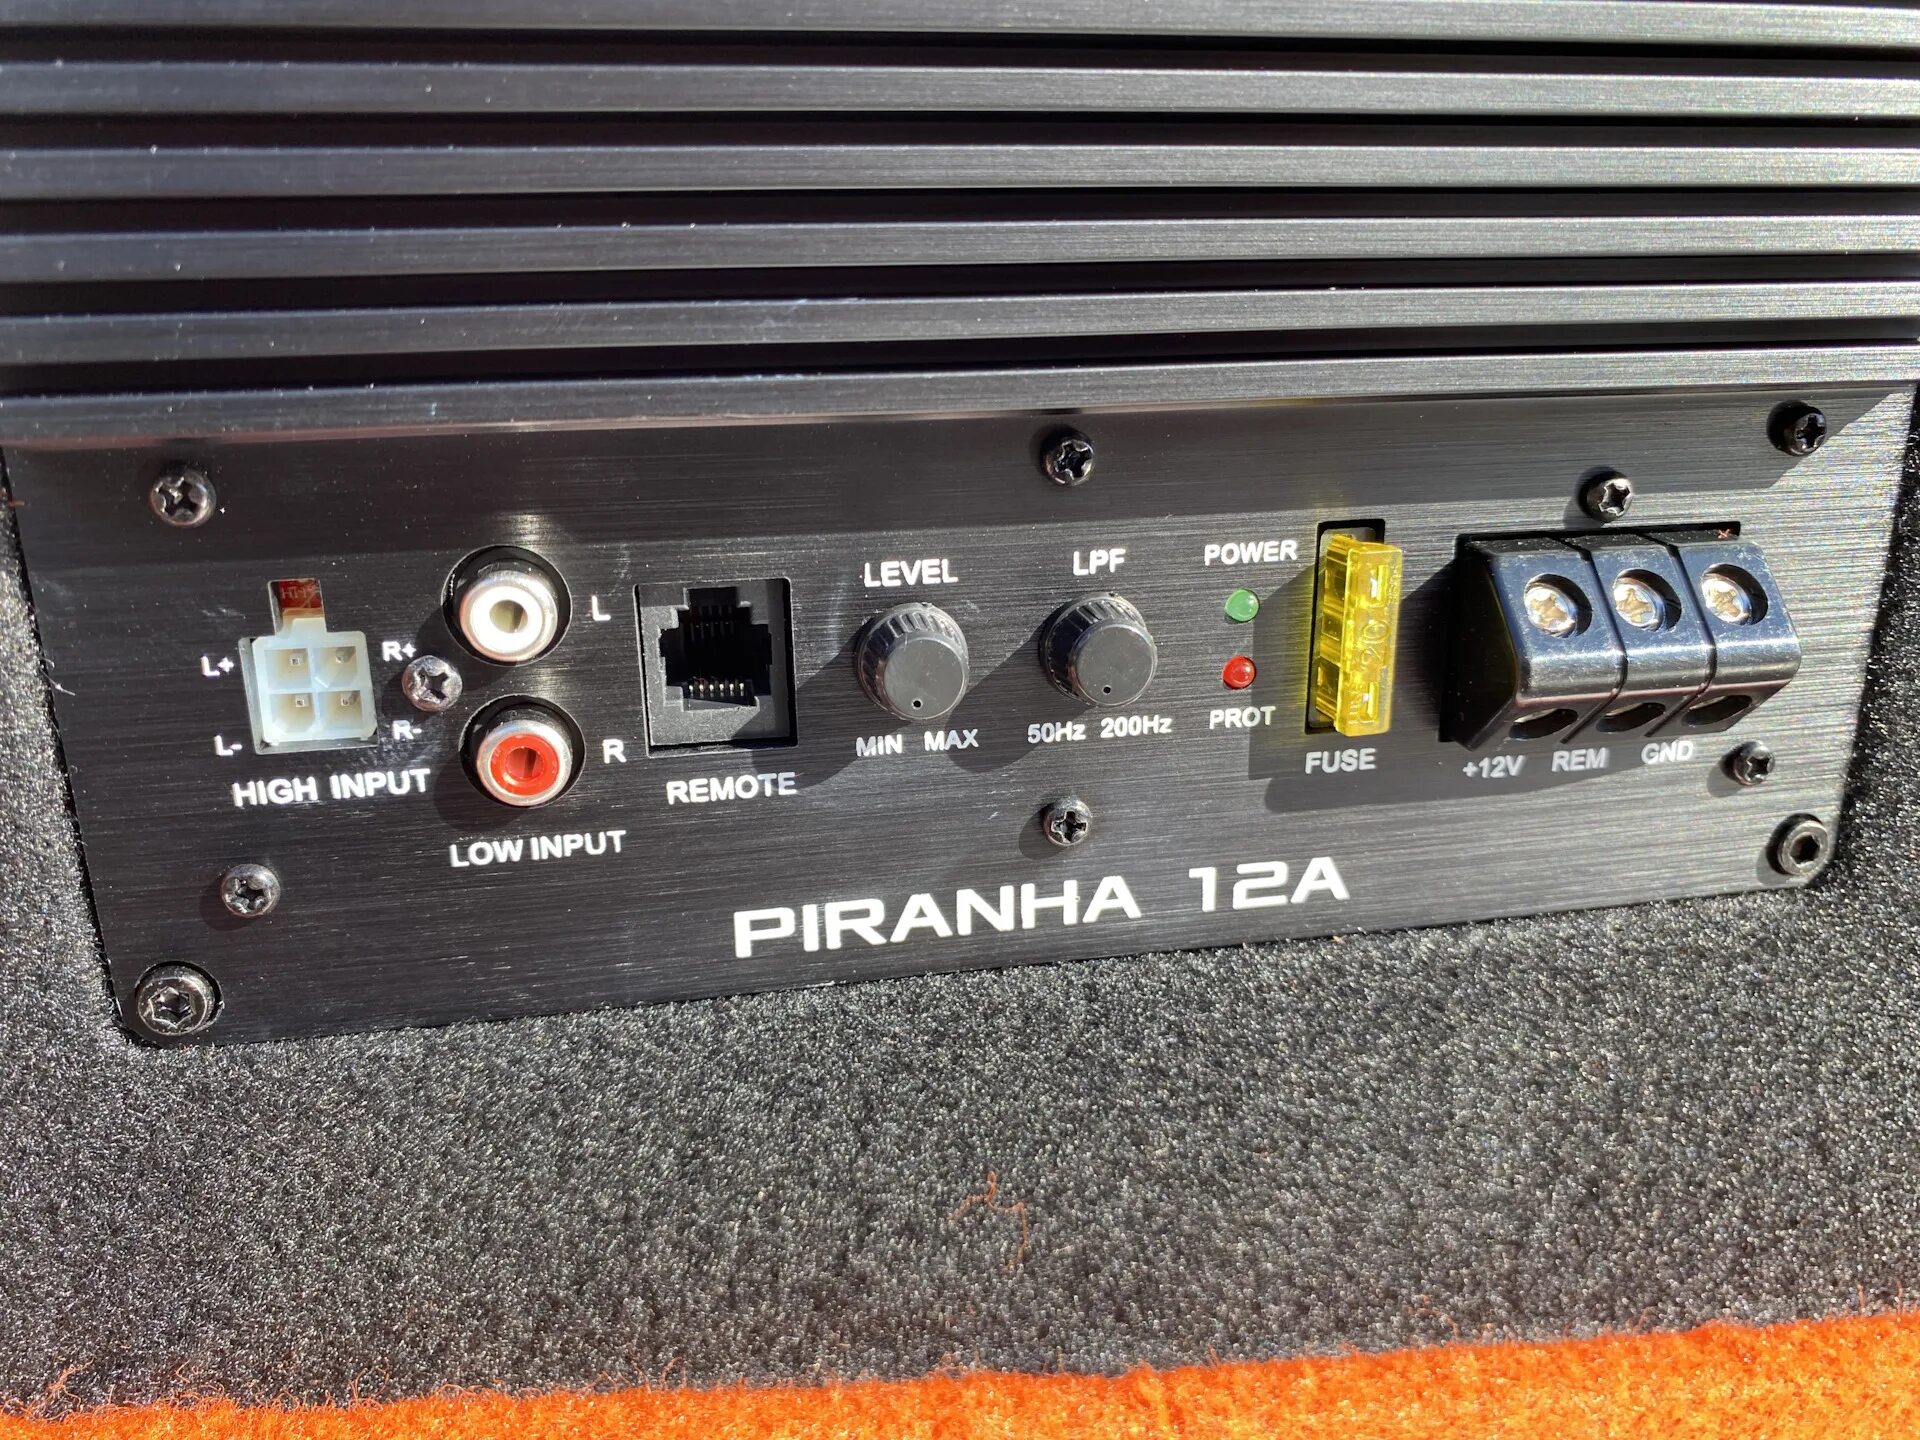 DL Audio Barracuda 12a. DL Audio Barracuda 12a Flat. Сабвуфер DL Audio Piranha 12a. Сабвуфер DL Audio Piranha 12a Flat. Dl barracuda 8 flat